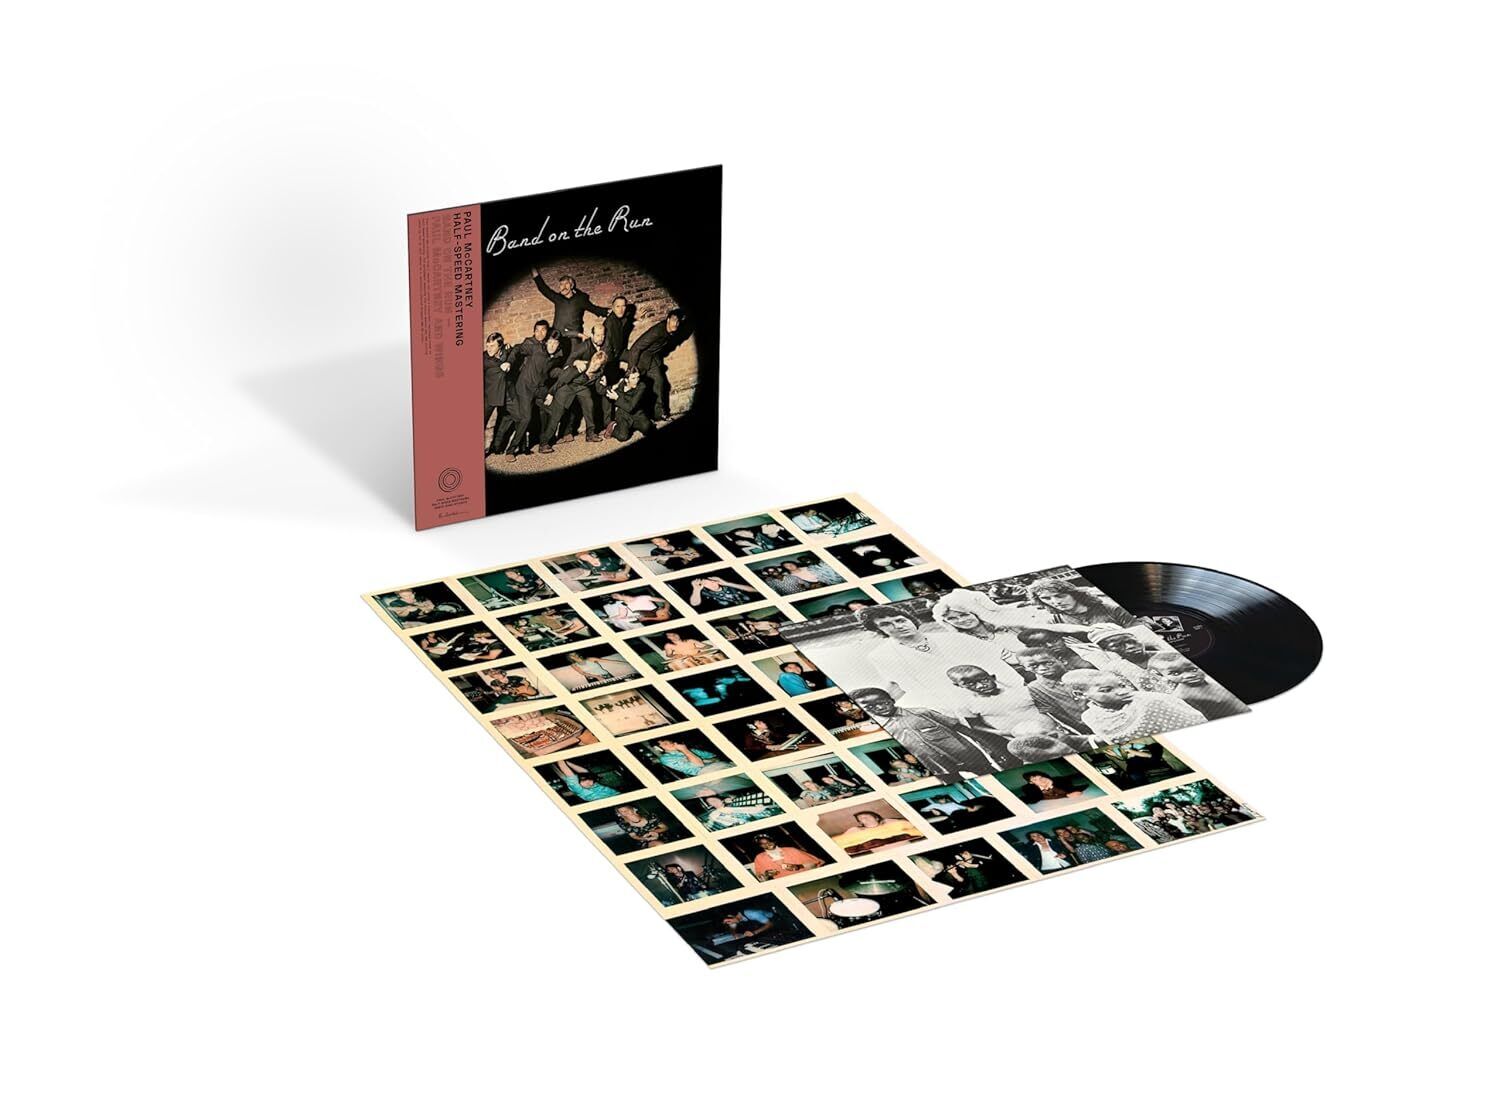 MCCARTNEY,PAUL & WINGS - BAND ON THE RUN(50TH/LP) Vinyl LP